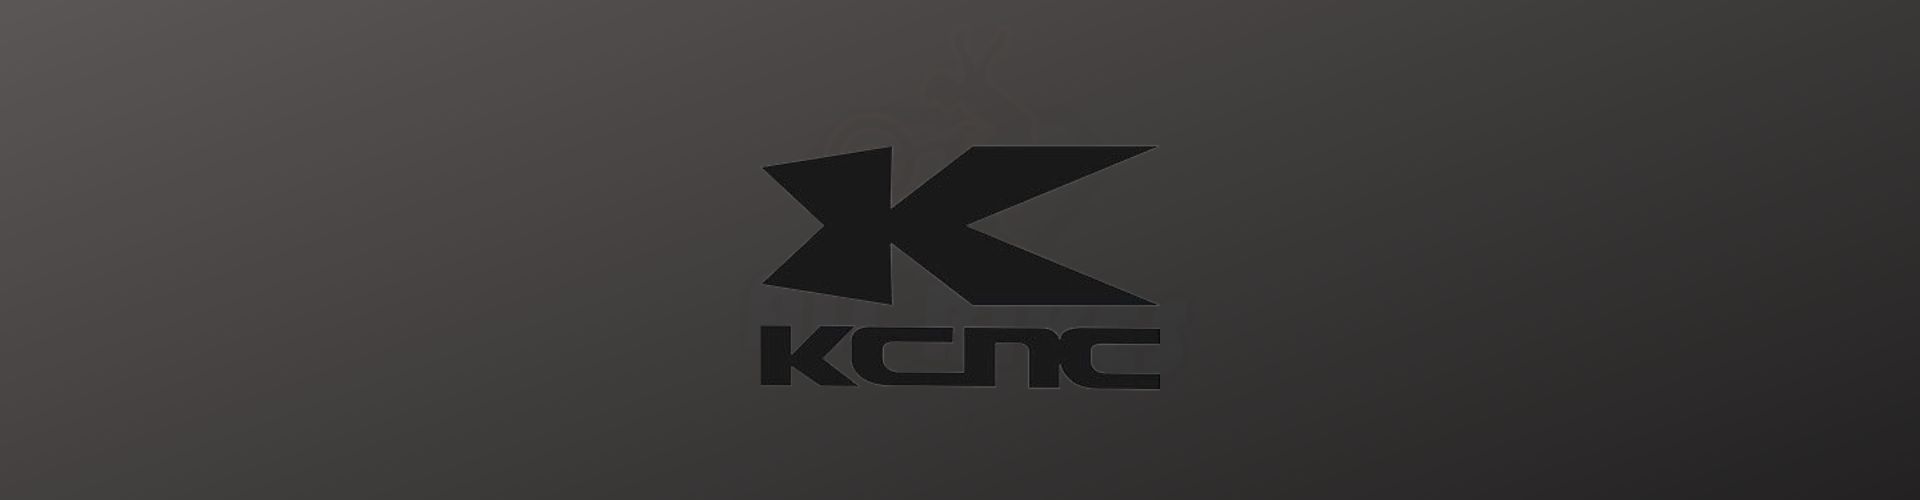 kcnc logo